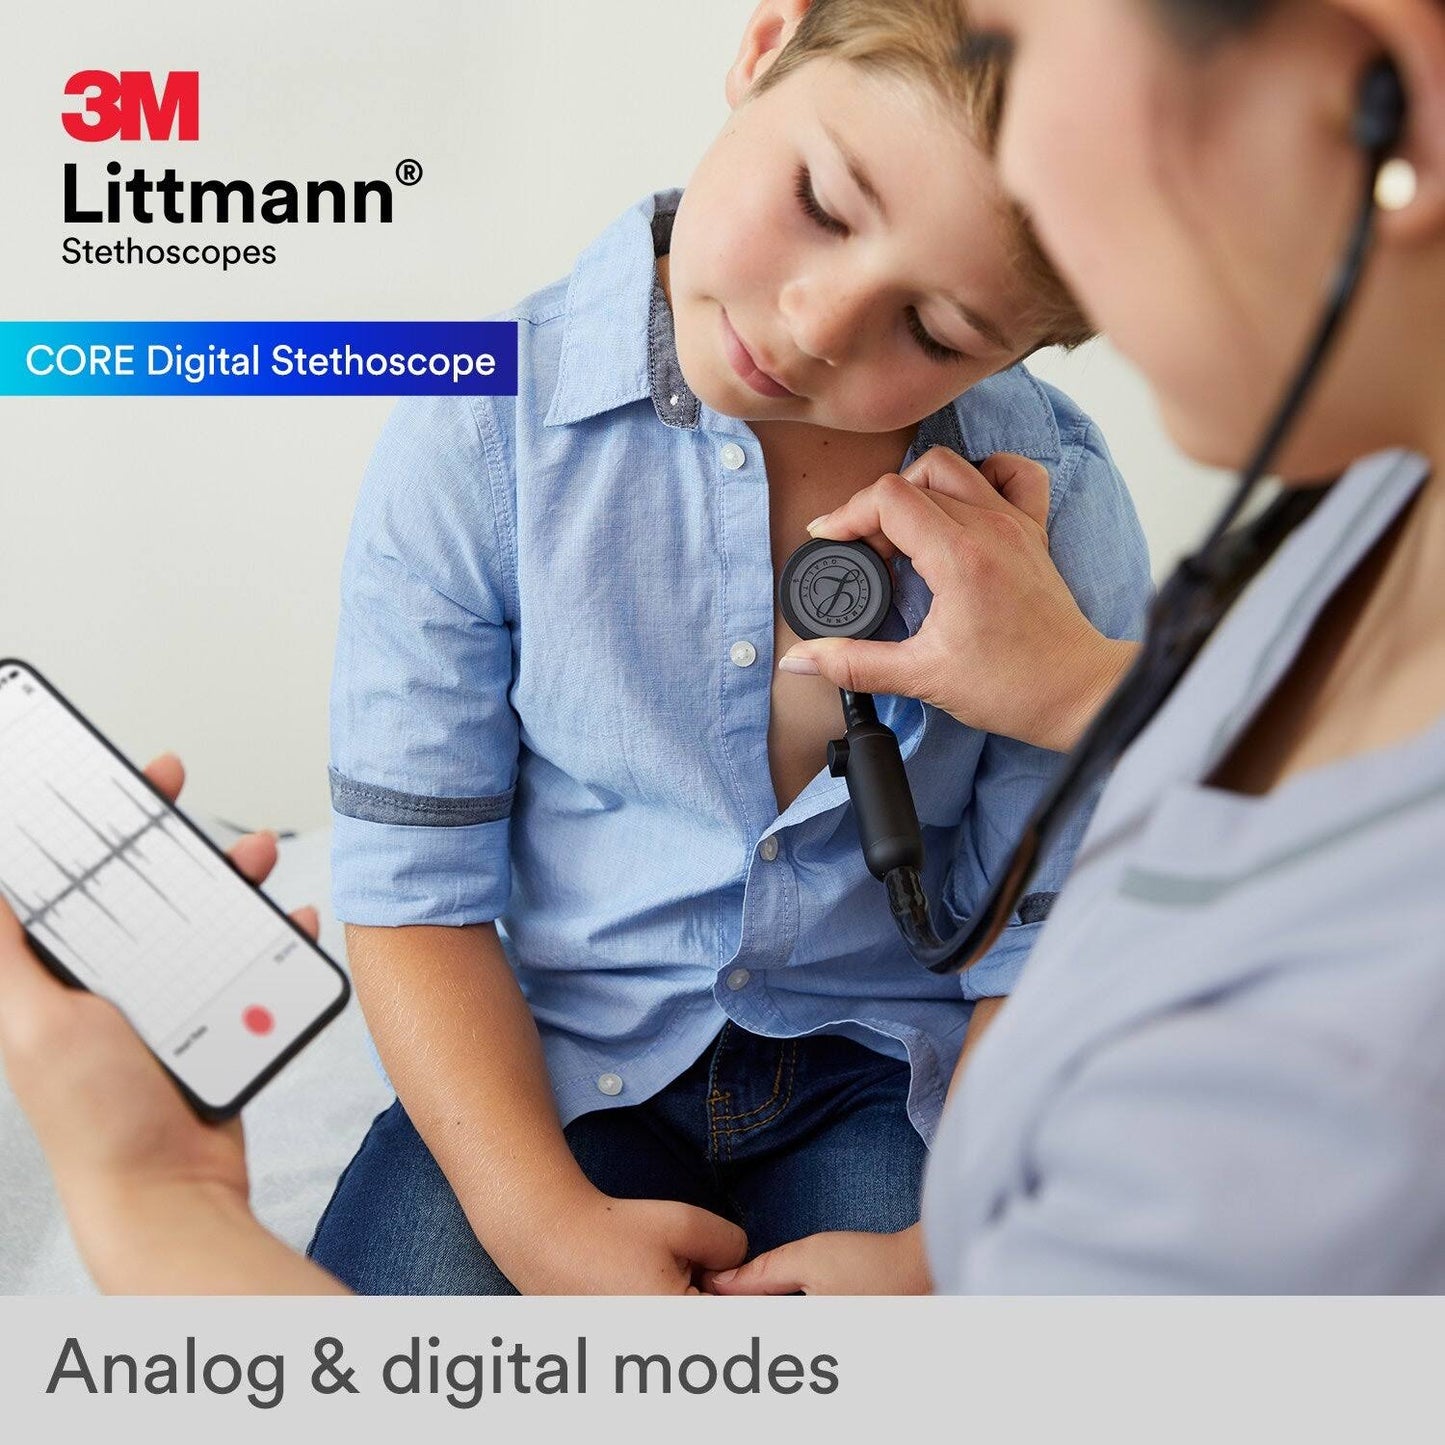 3M Littmann CORE Digital Stethoscope - Advanced Cardiology Stethoscope, Bluetooth Connectivity, Heart Sound Amplification, Dual Mode, Noise Reduction